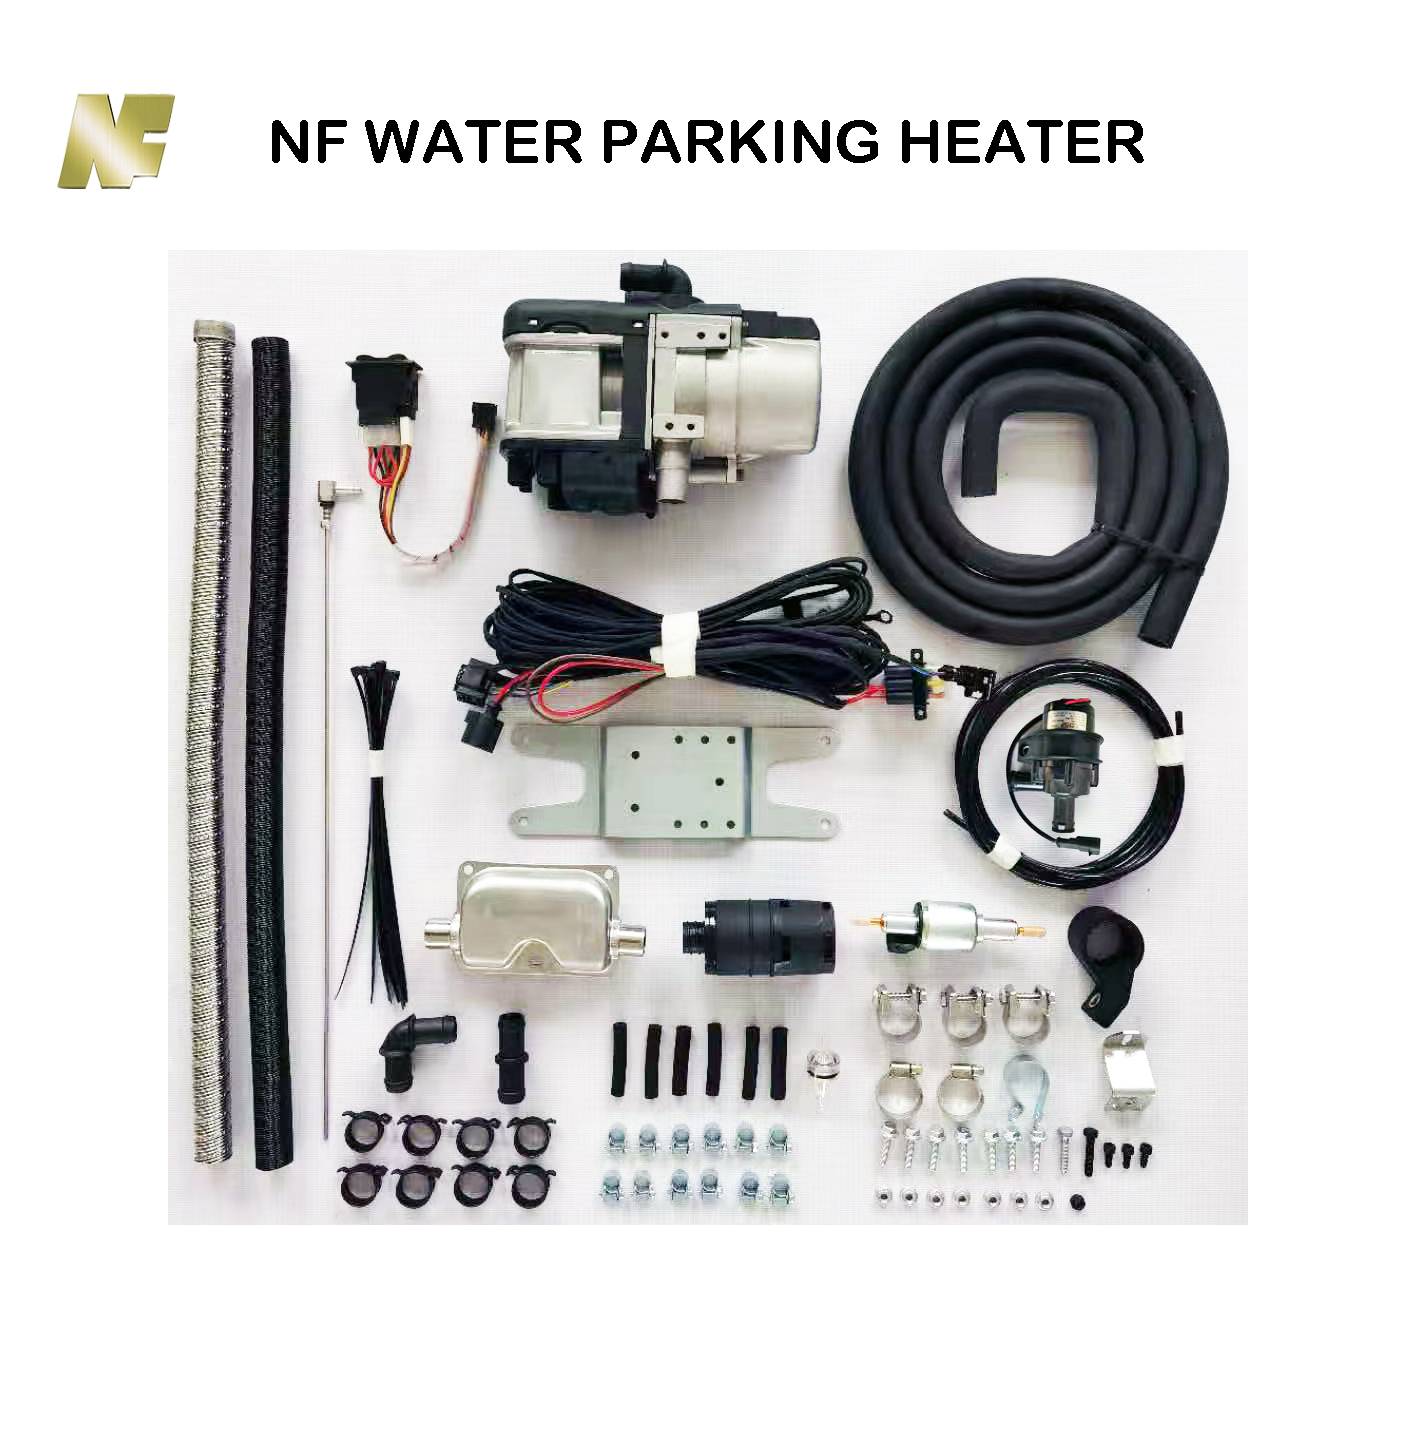 NF water parking heater(1)